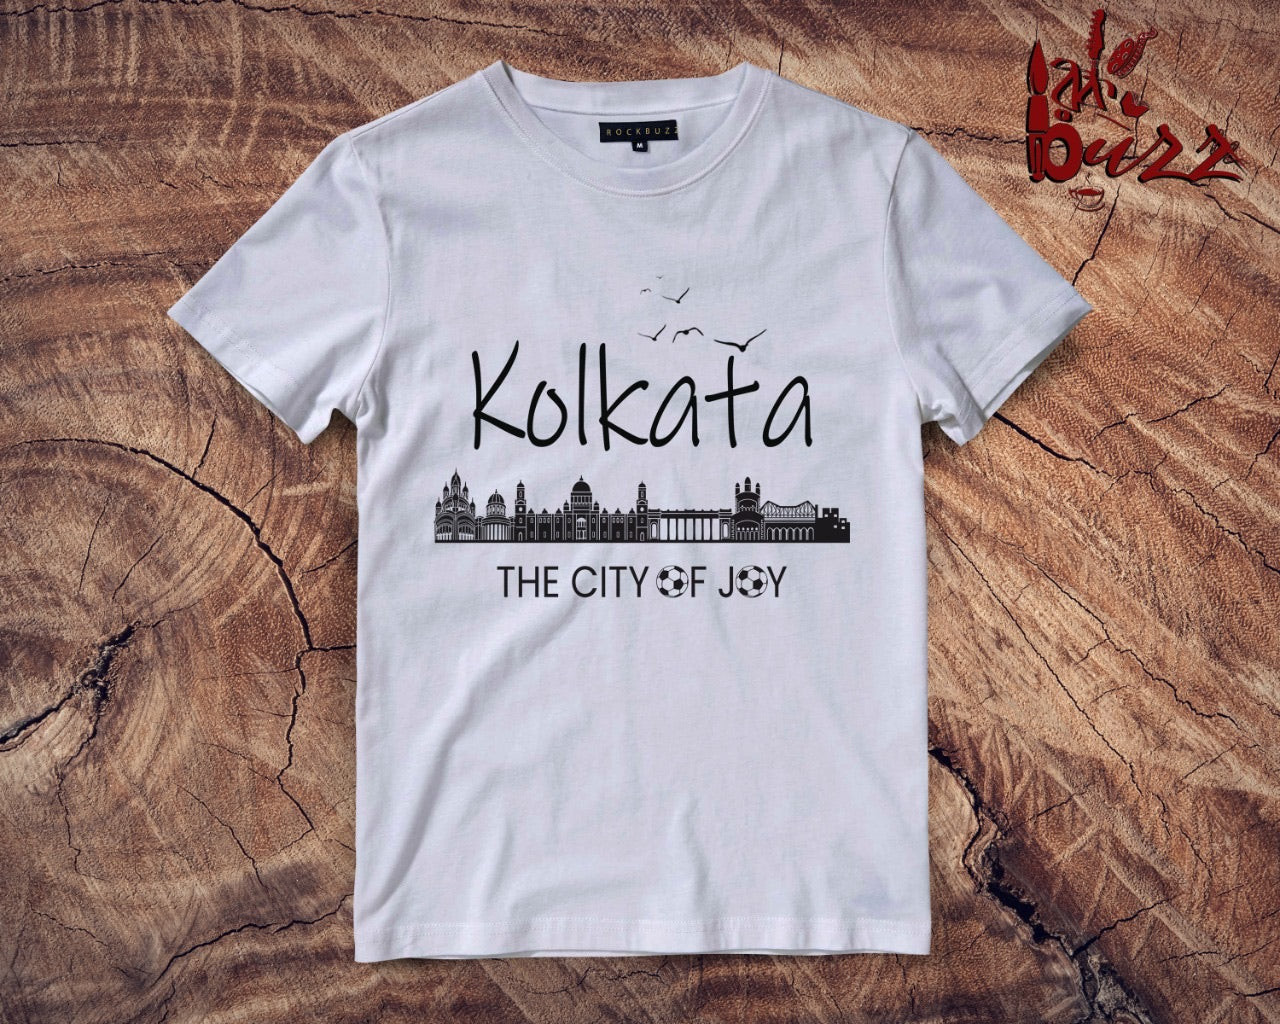 Best Printed Tshirt for men Online in India